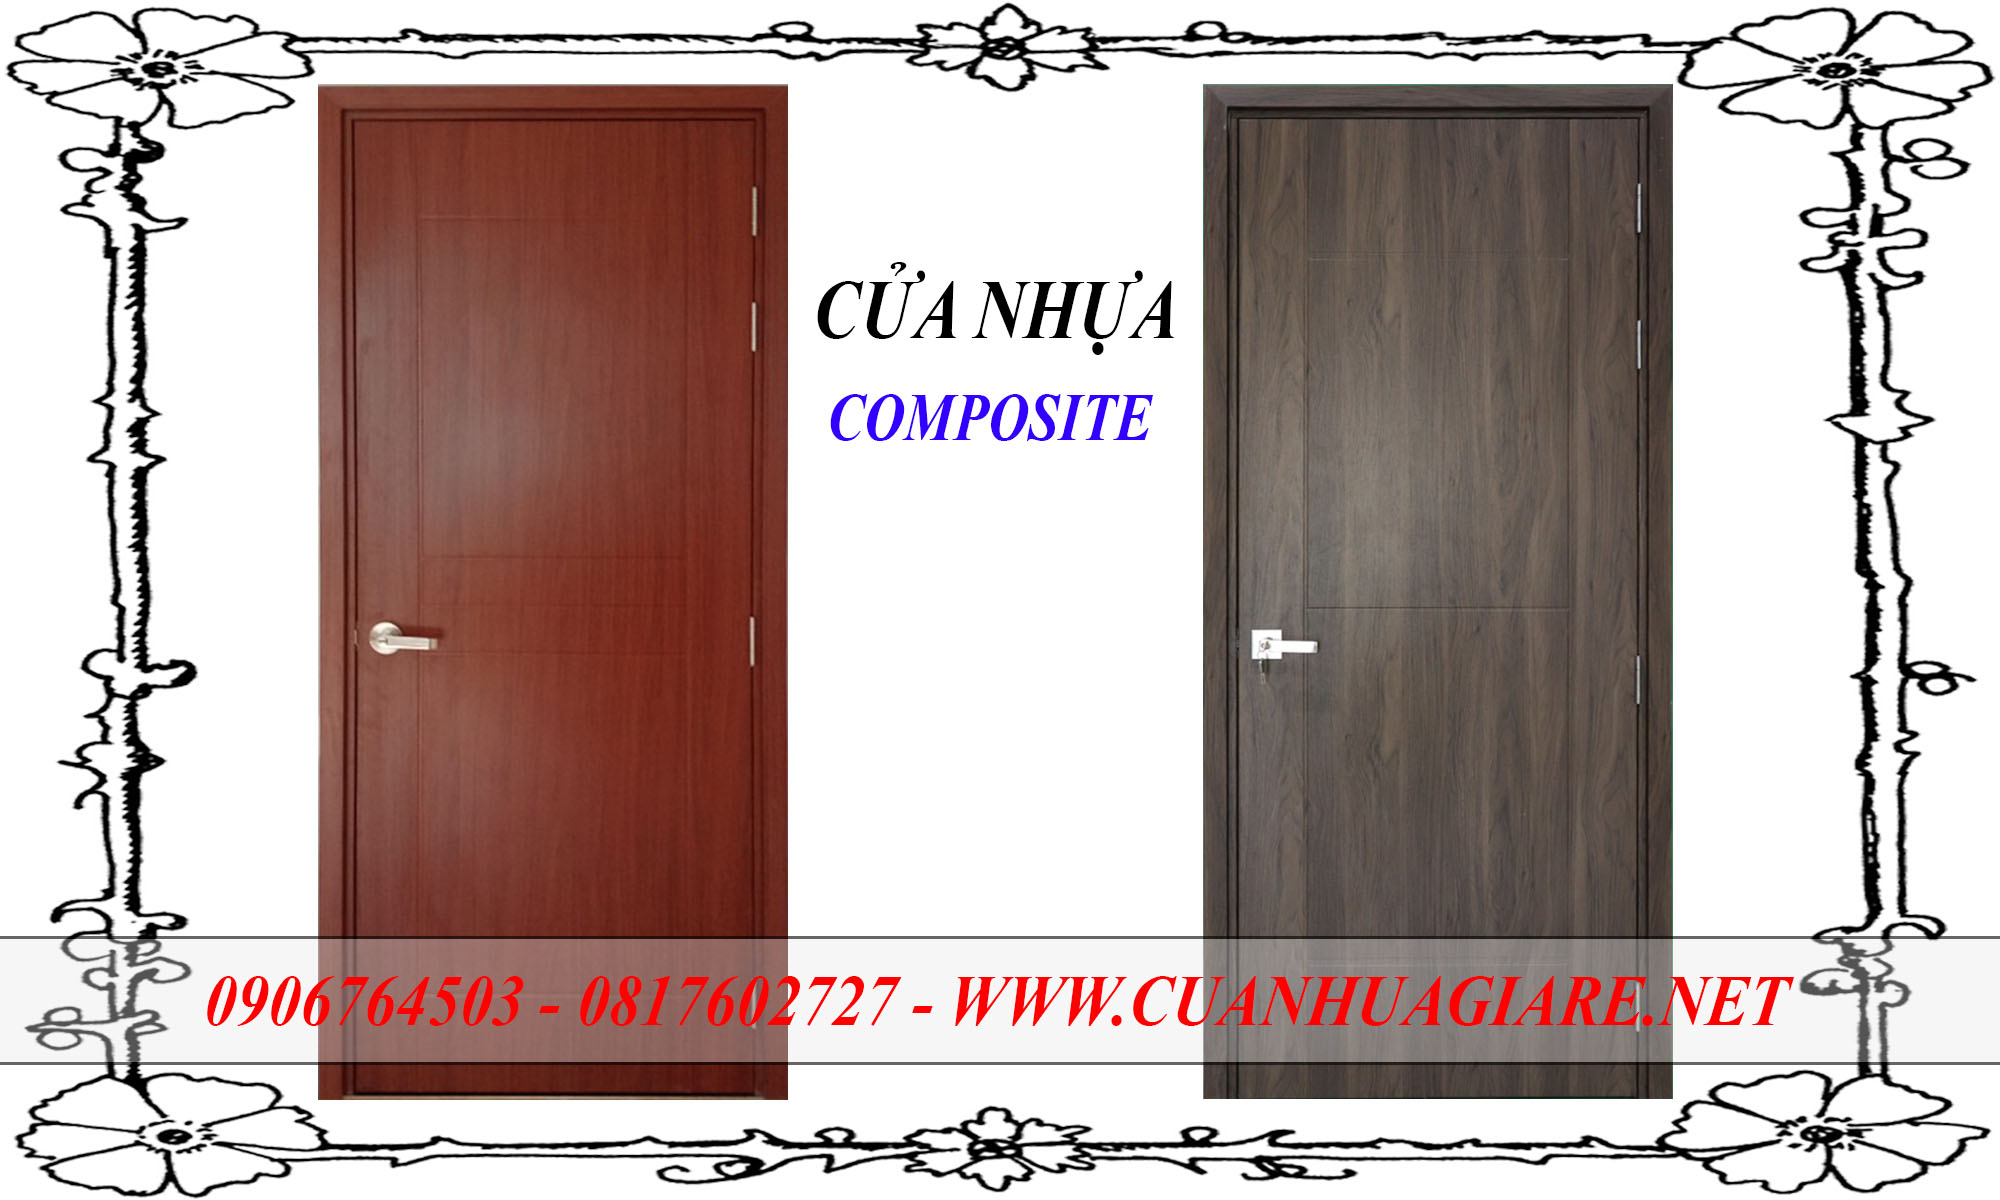 cua-nhua-composite1.jpg